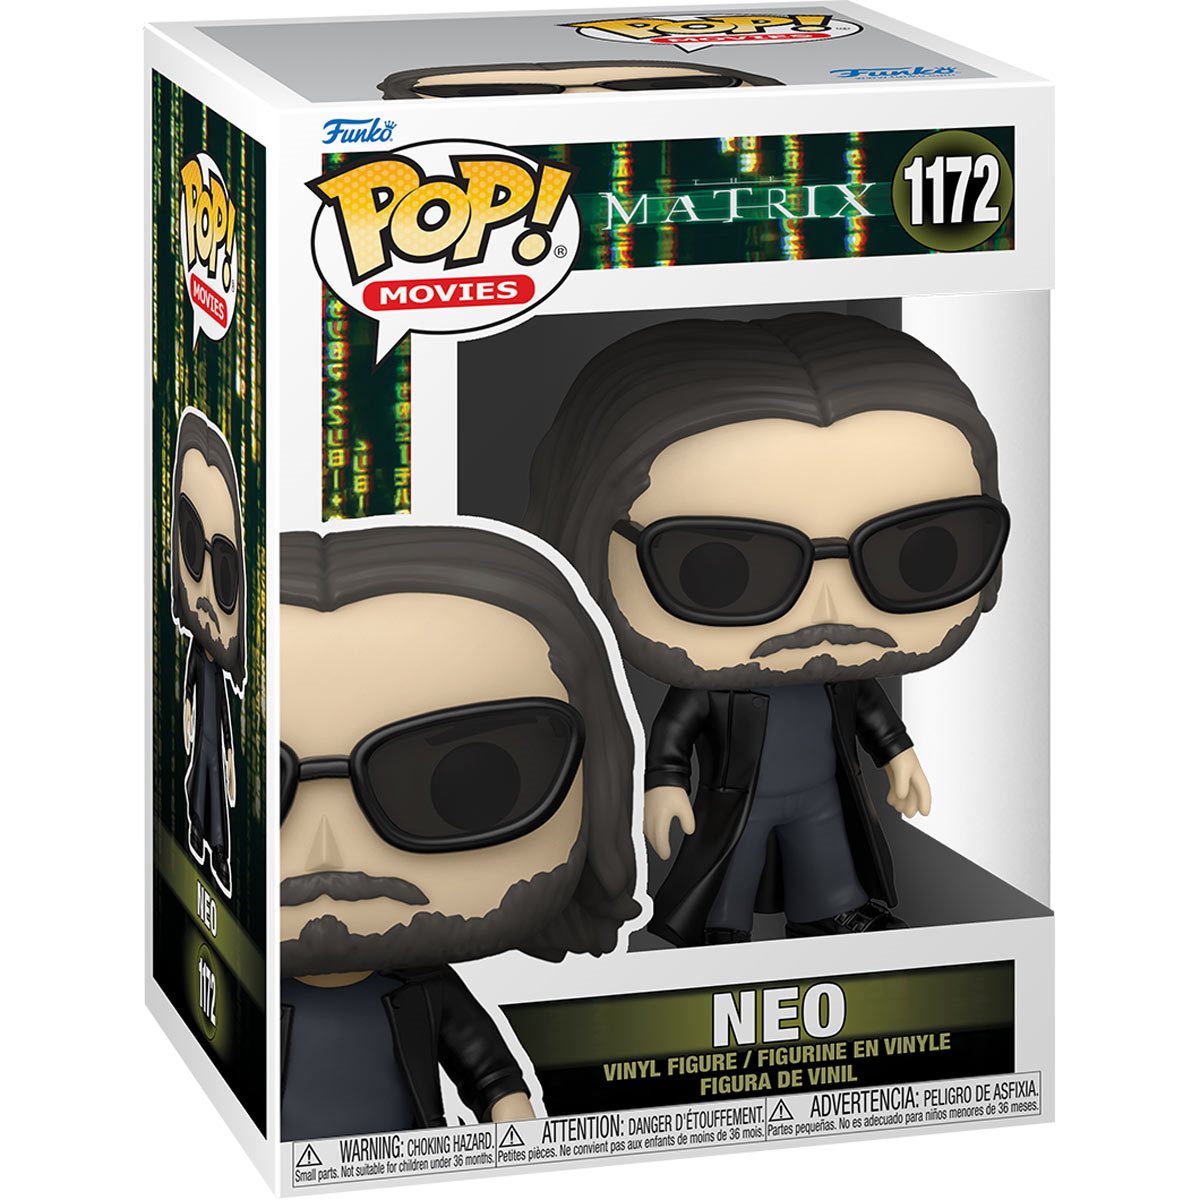 Neo Funko Pop! Movies The Matrix Resurrections #1172 Vinyl Figure